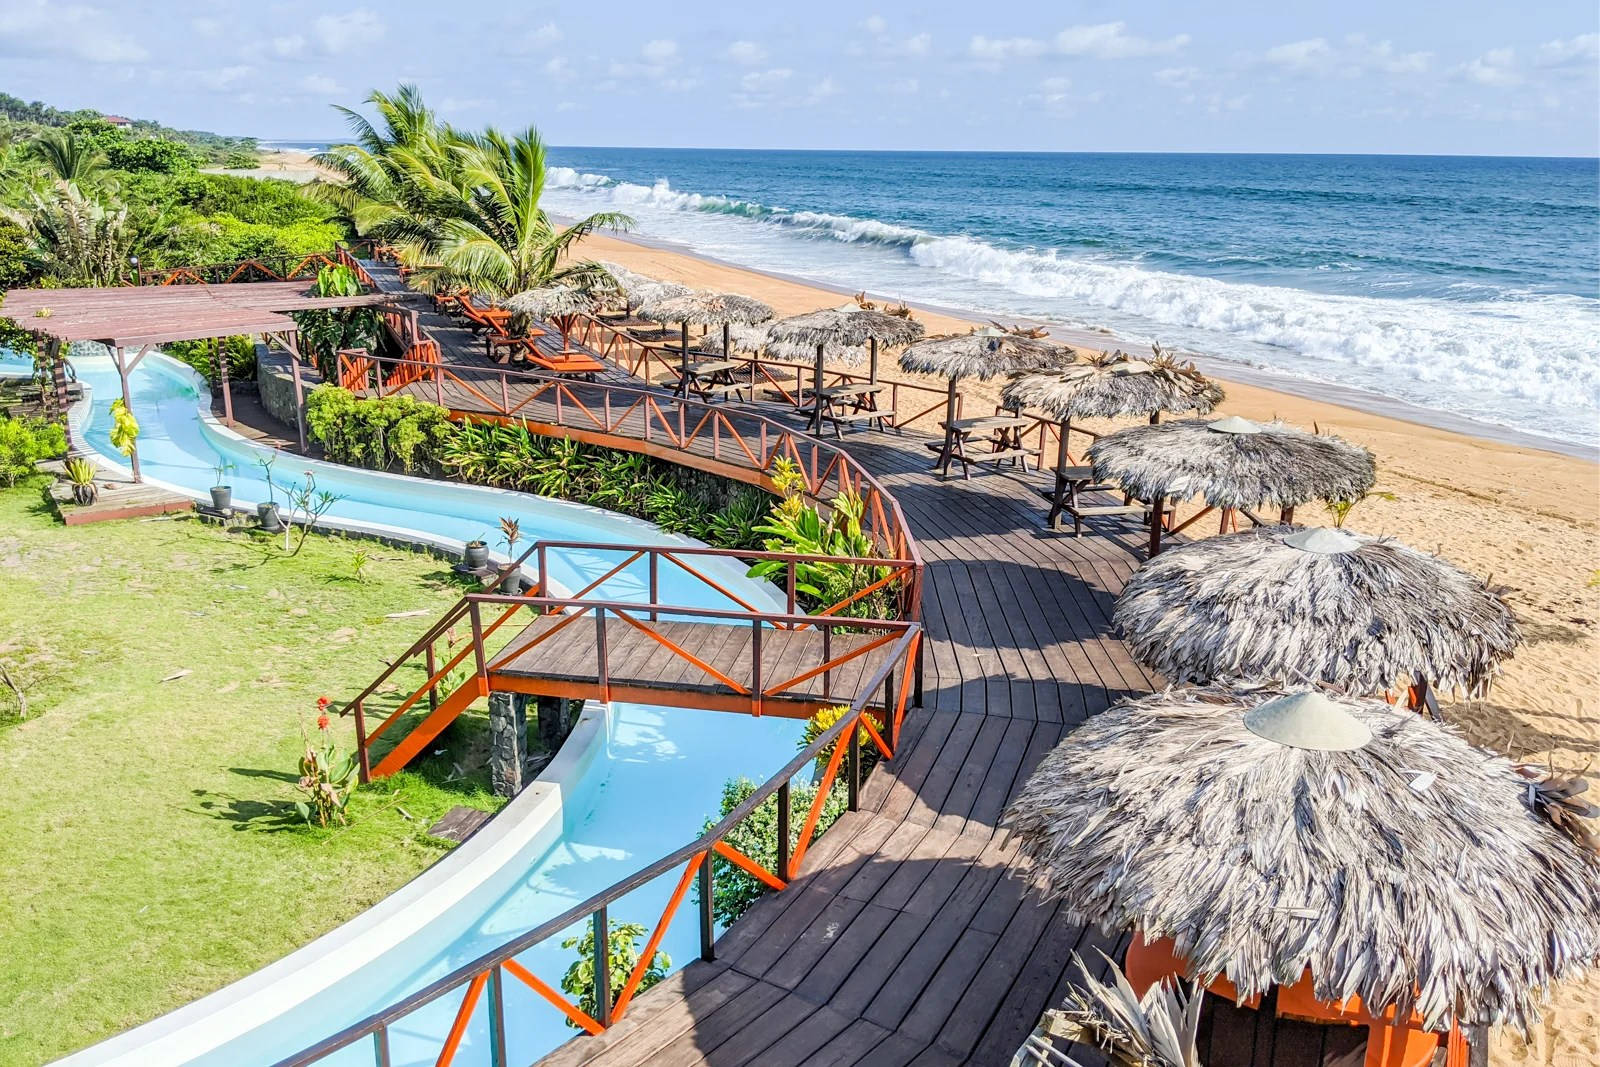 Liberia Beach Resort Background